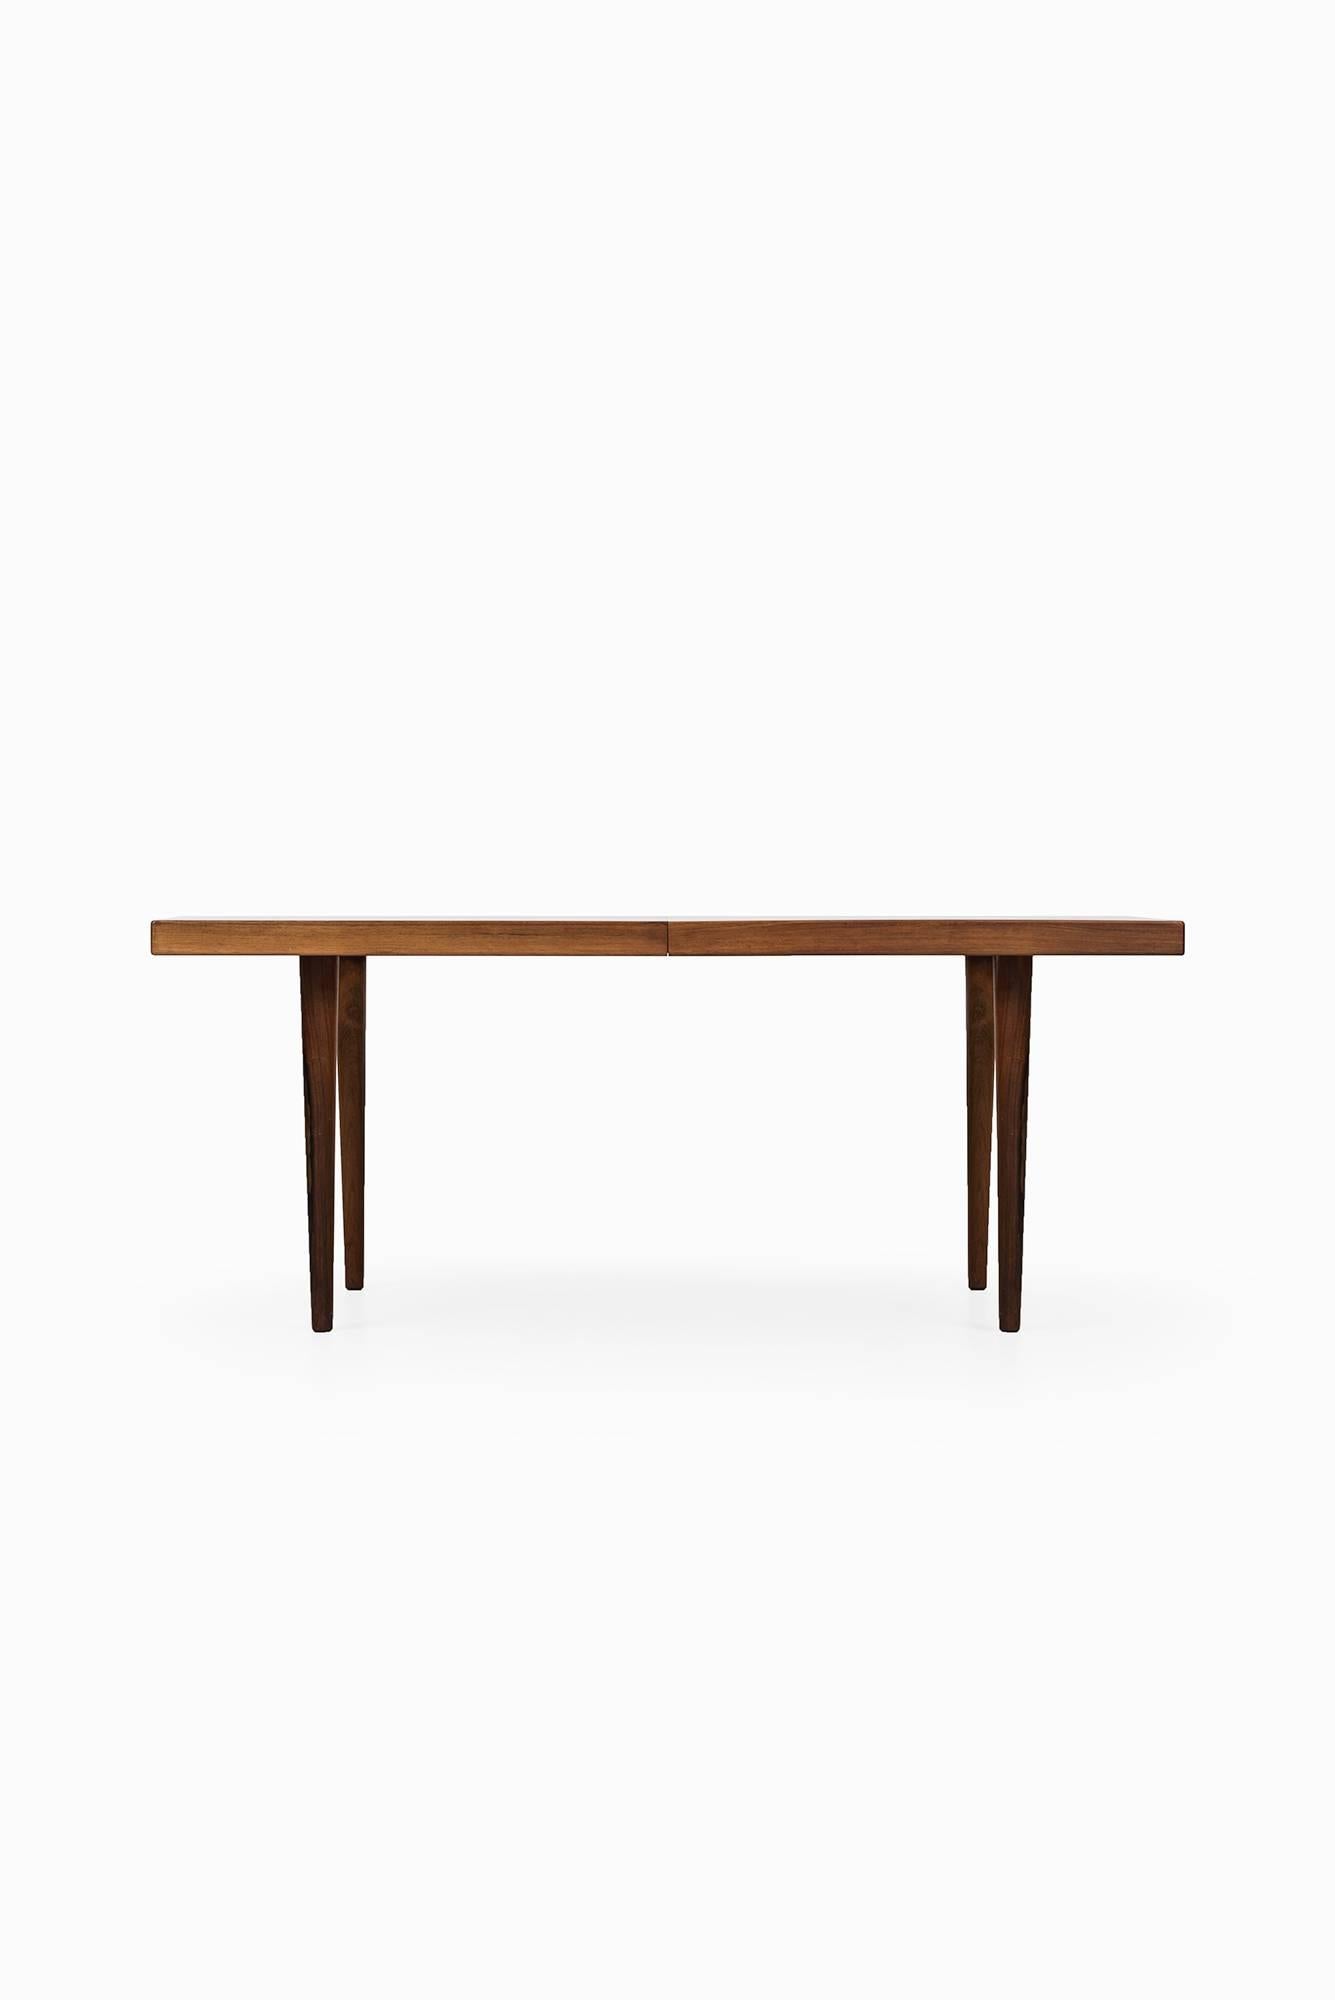 Very rare dining table designed by Nanna Ditzel. Produced by Søren Willadsen Møbelfabrik in Denmark.